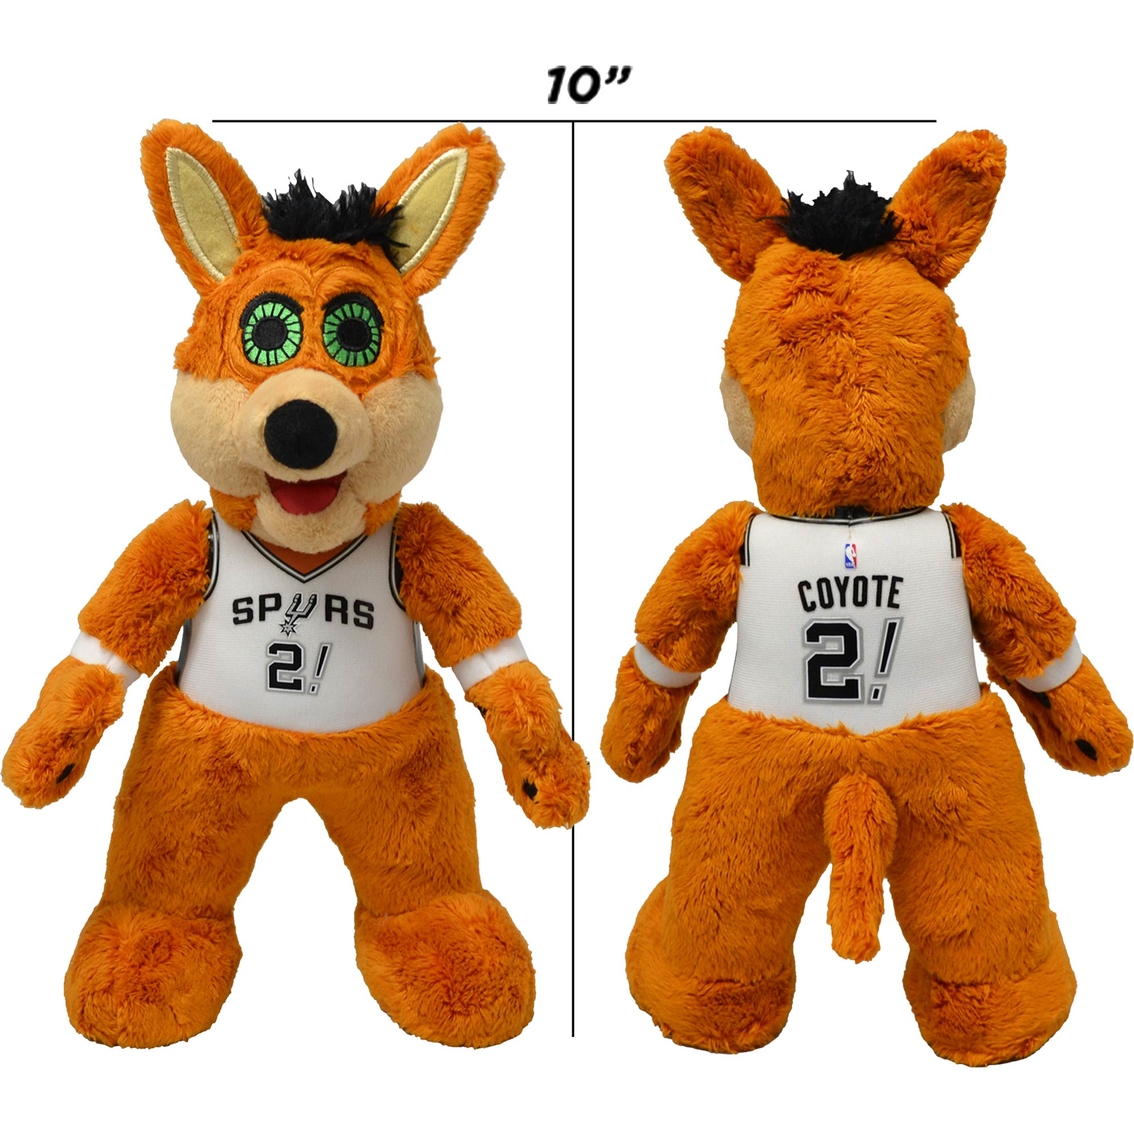 SPURS, Toys, Sold Nba San Antonio Spurs Coyote